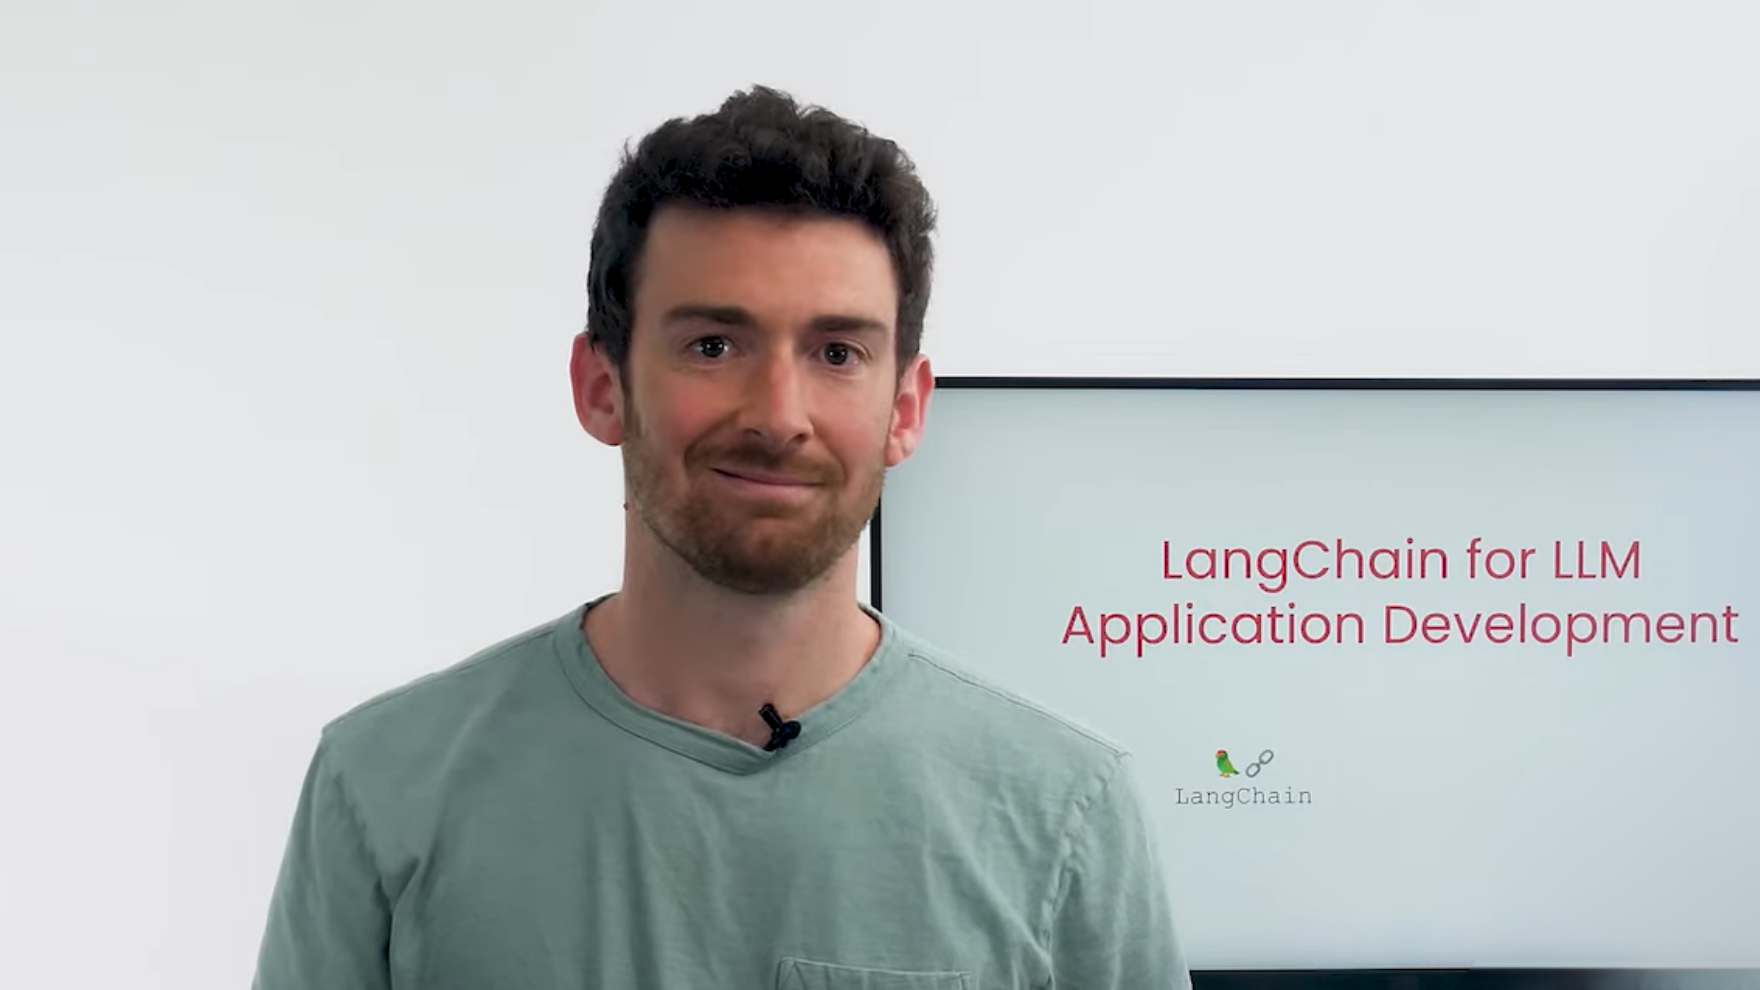 LangChain for LLM Application Development